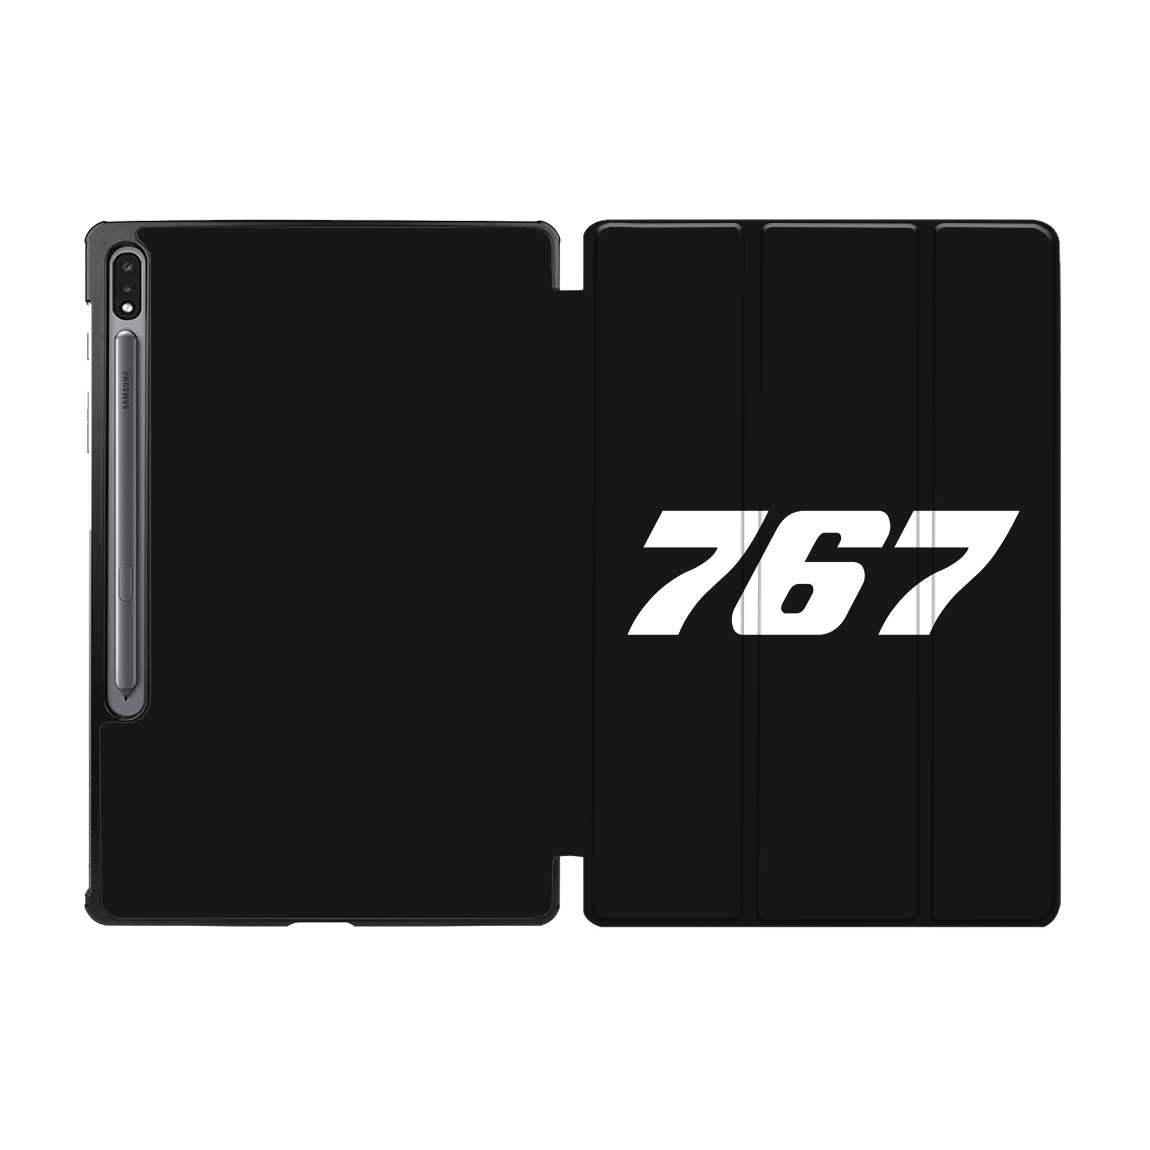 767 Flat Text Designed Samsung Tablet Cases